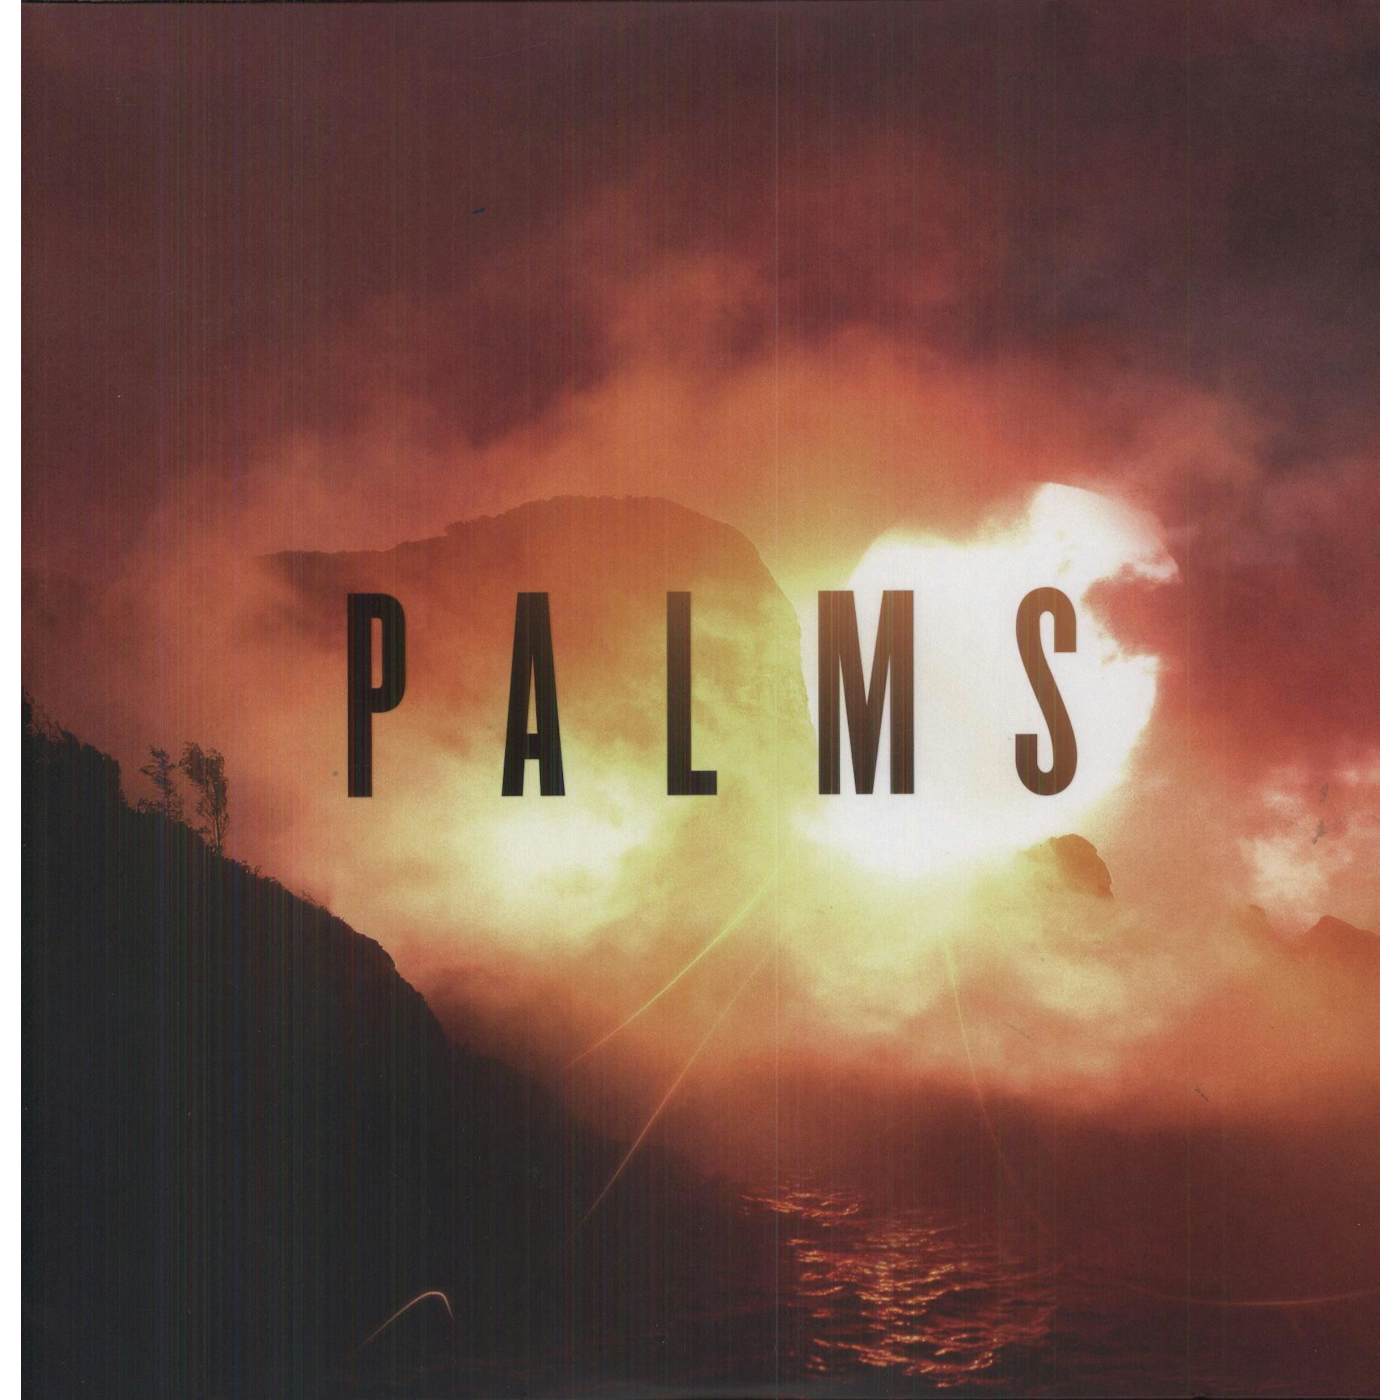 Palms Vinyl Record